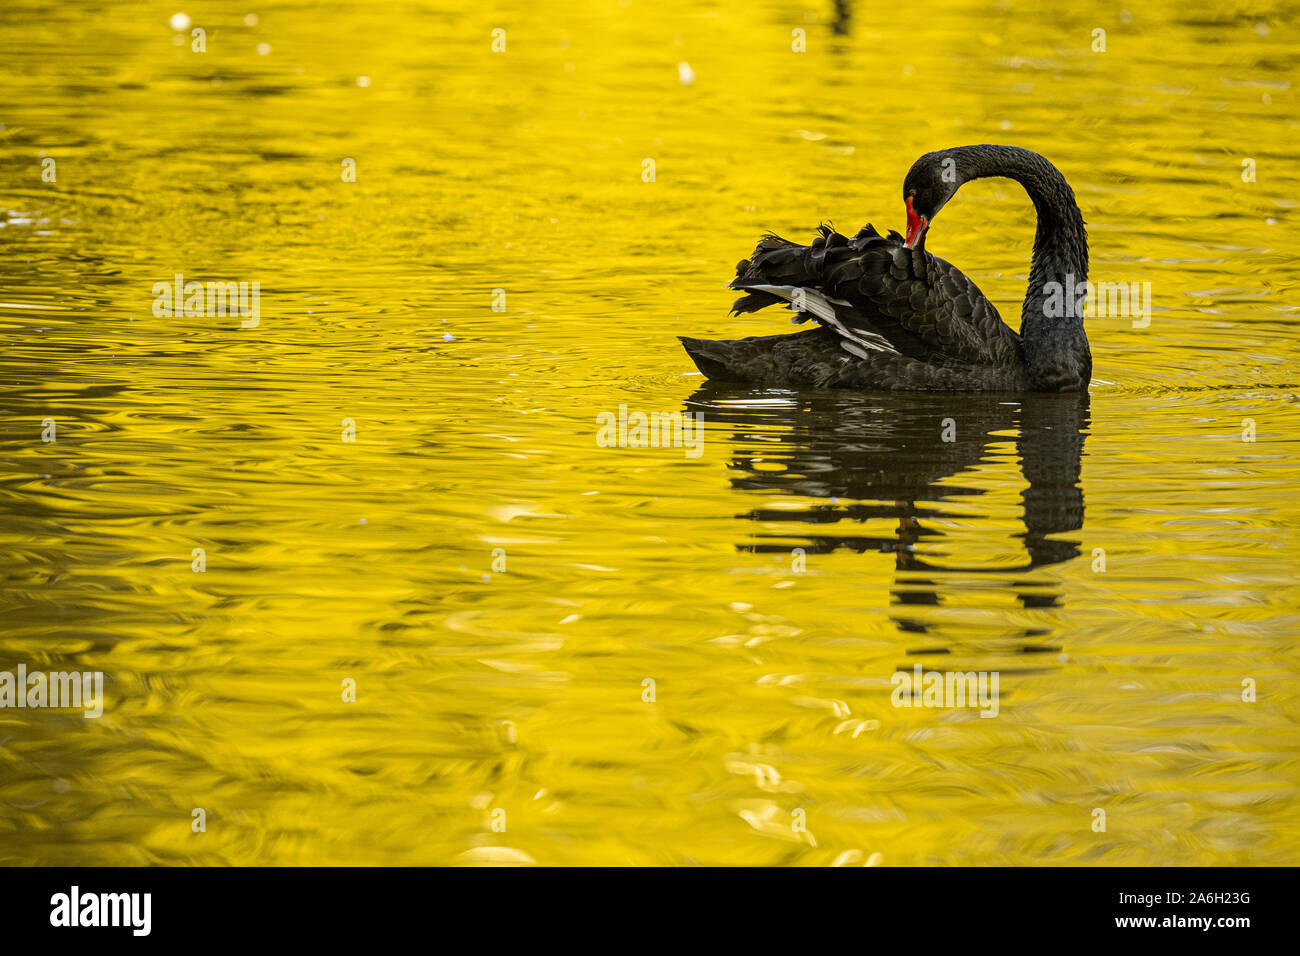 Black Swan (Cygnus atratus) swimming in a lake. Stock Photo